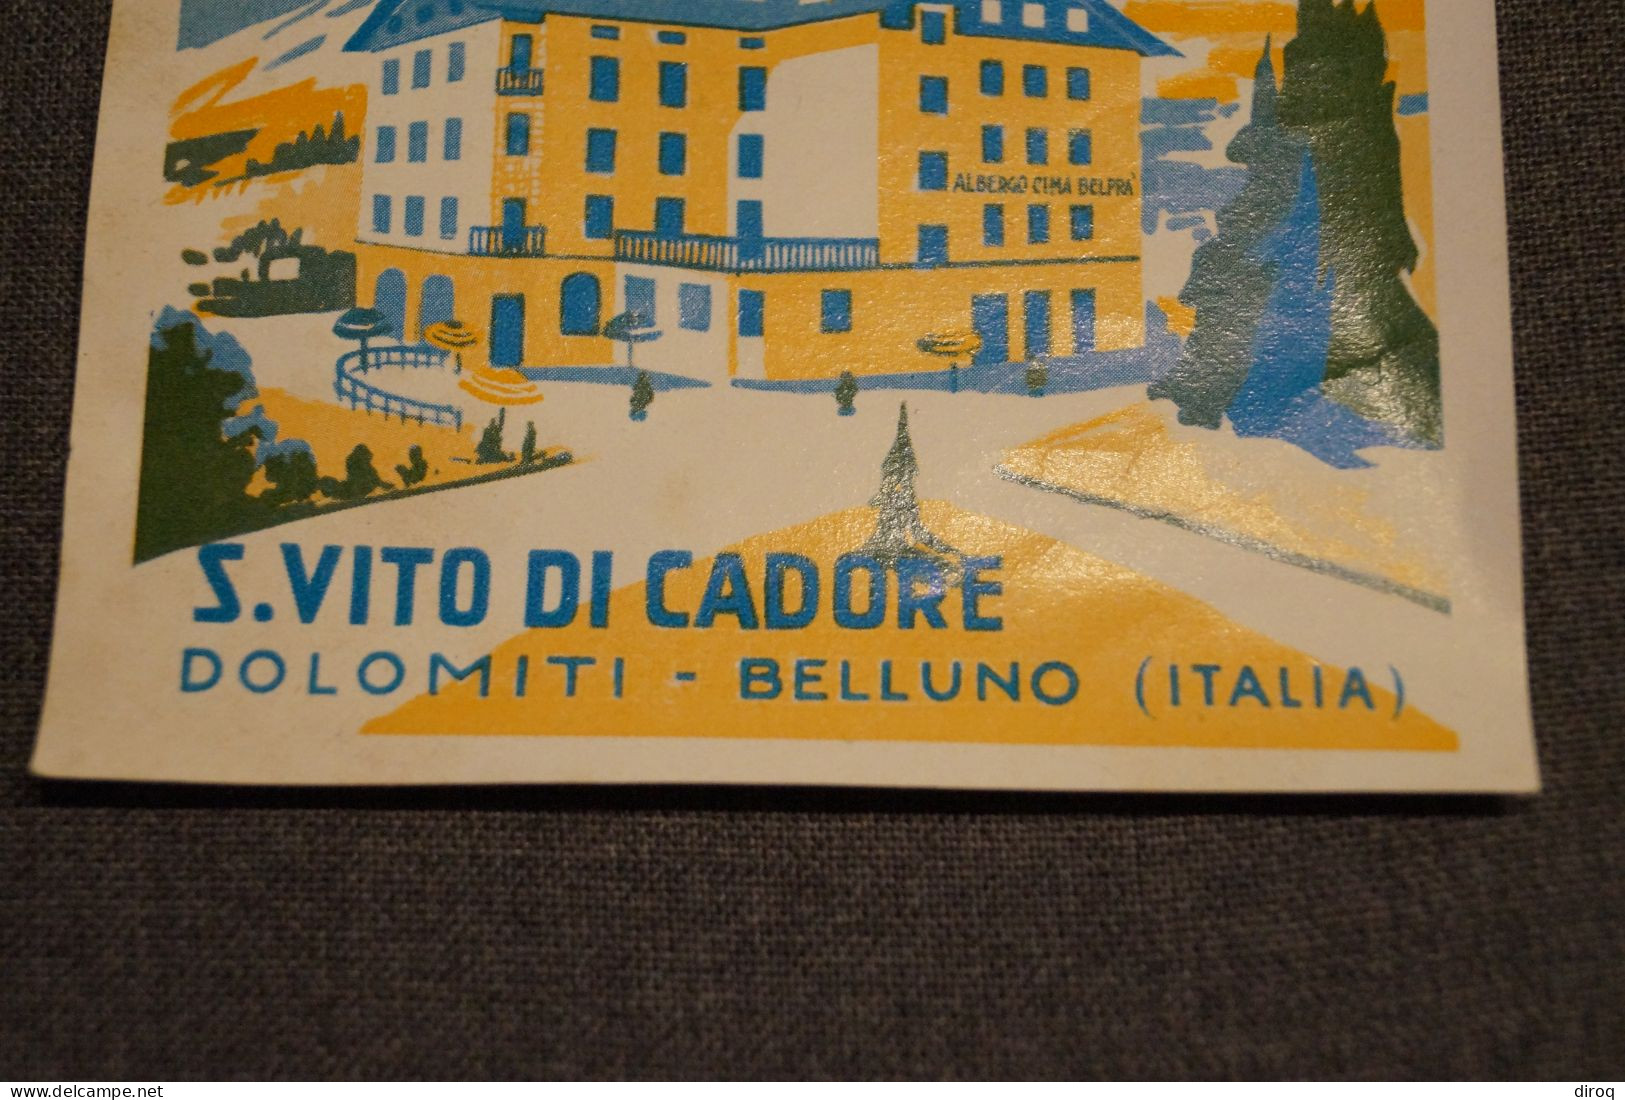 Belle Ancienne Petite Affiche Originale,Italie,Albergo Cima Belpra,Dolomiti - Belluno,122 / 102 Mm. - Affiches